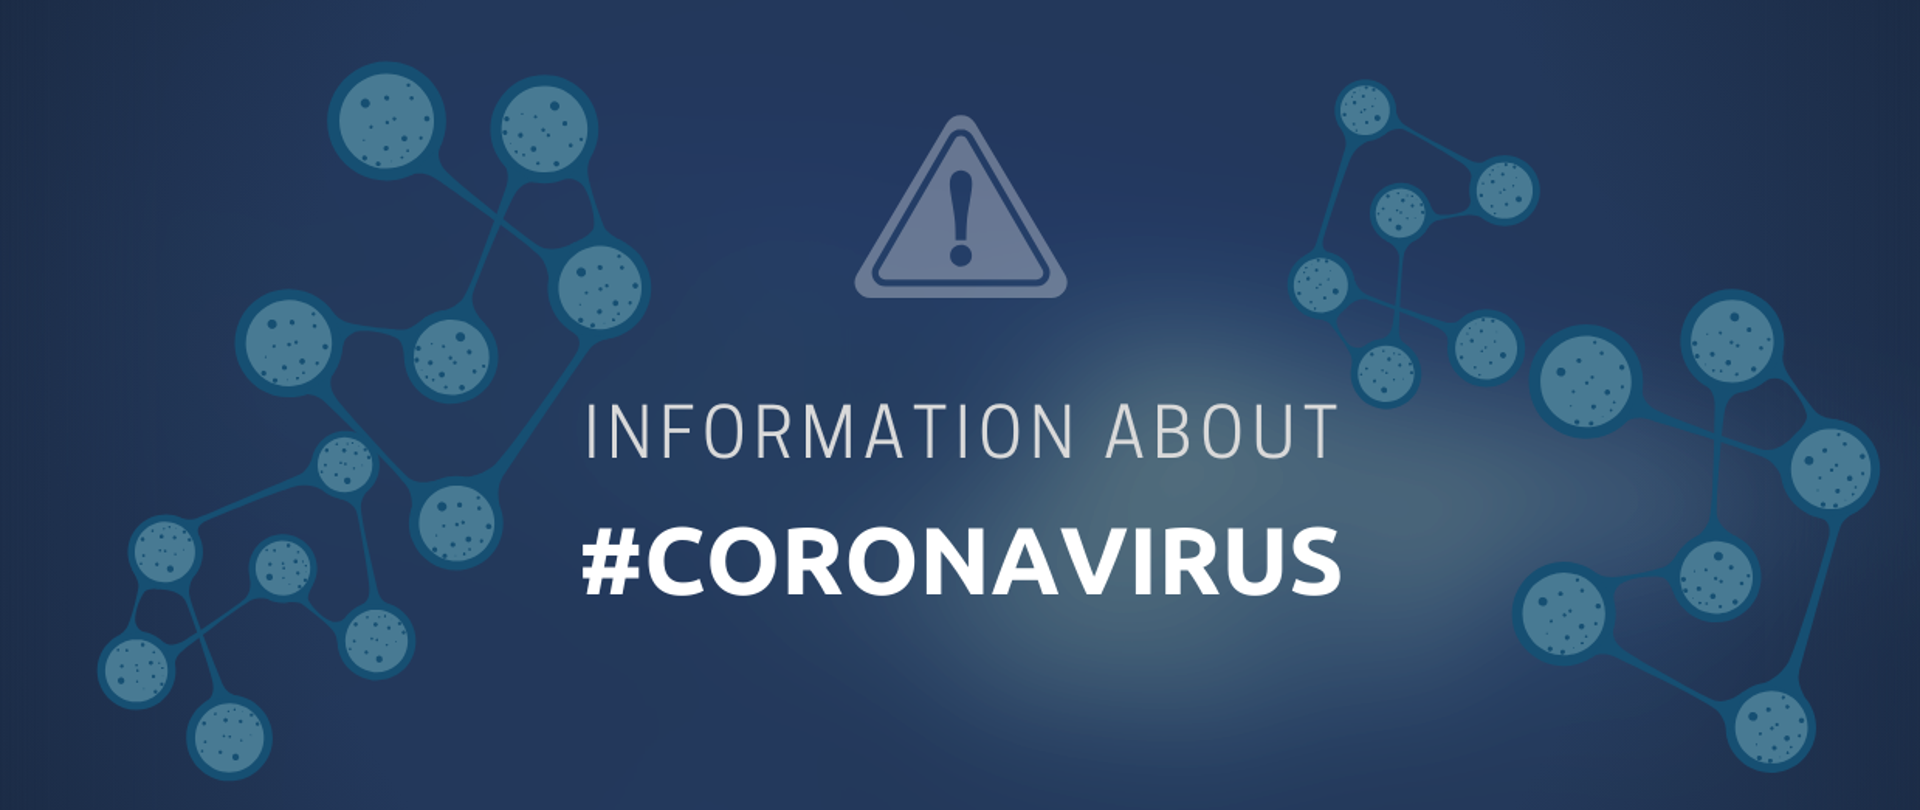 coronavirus alert picture